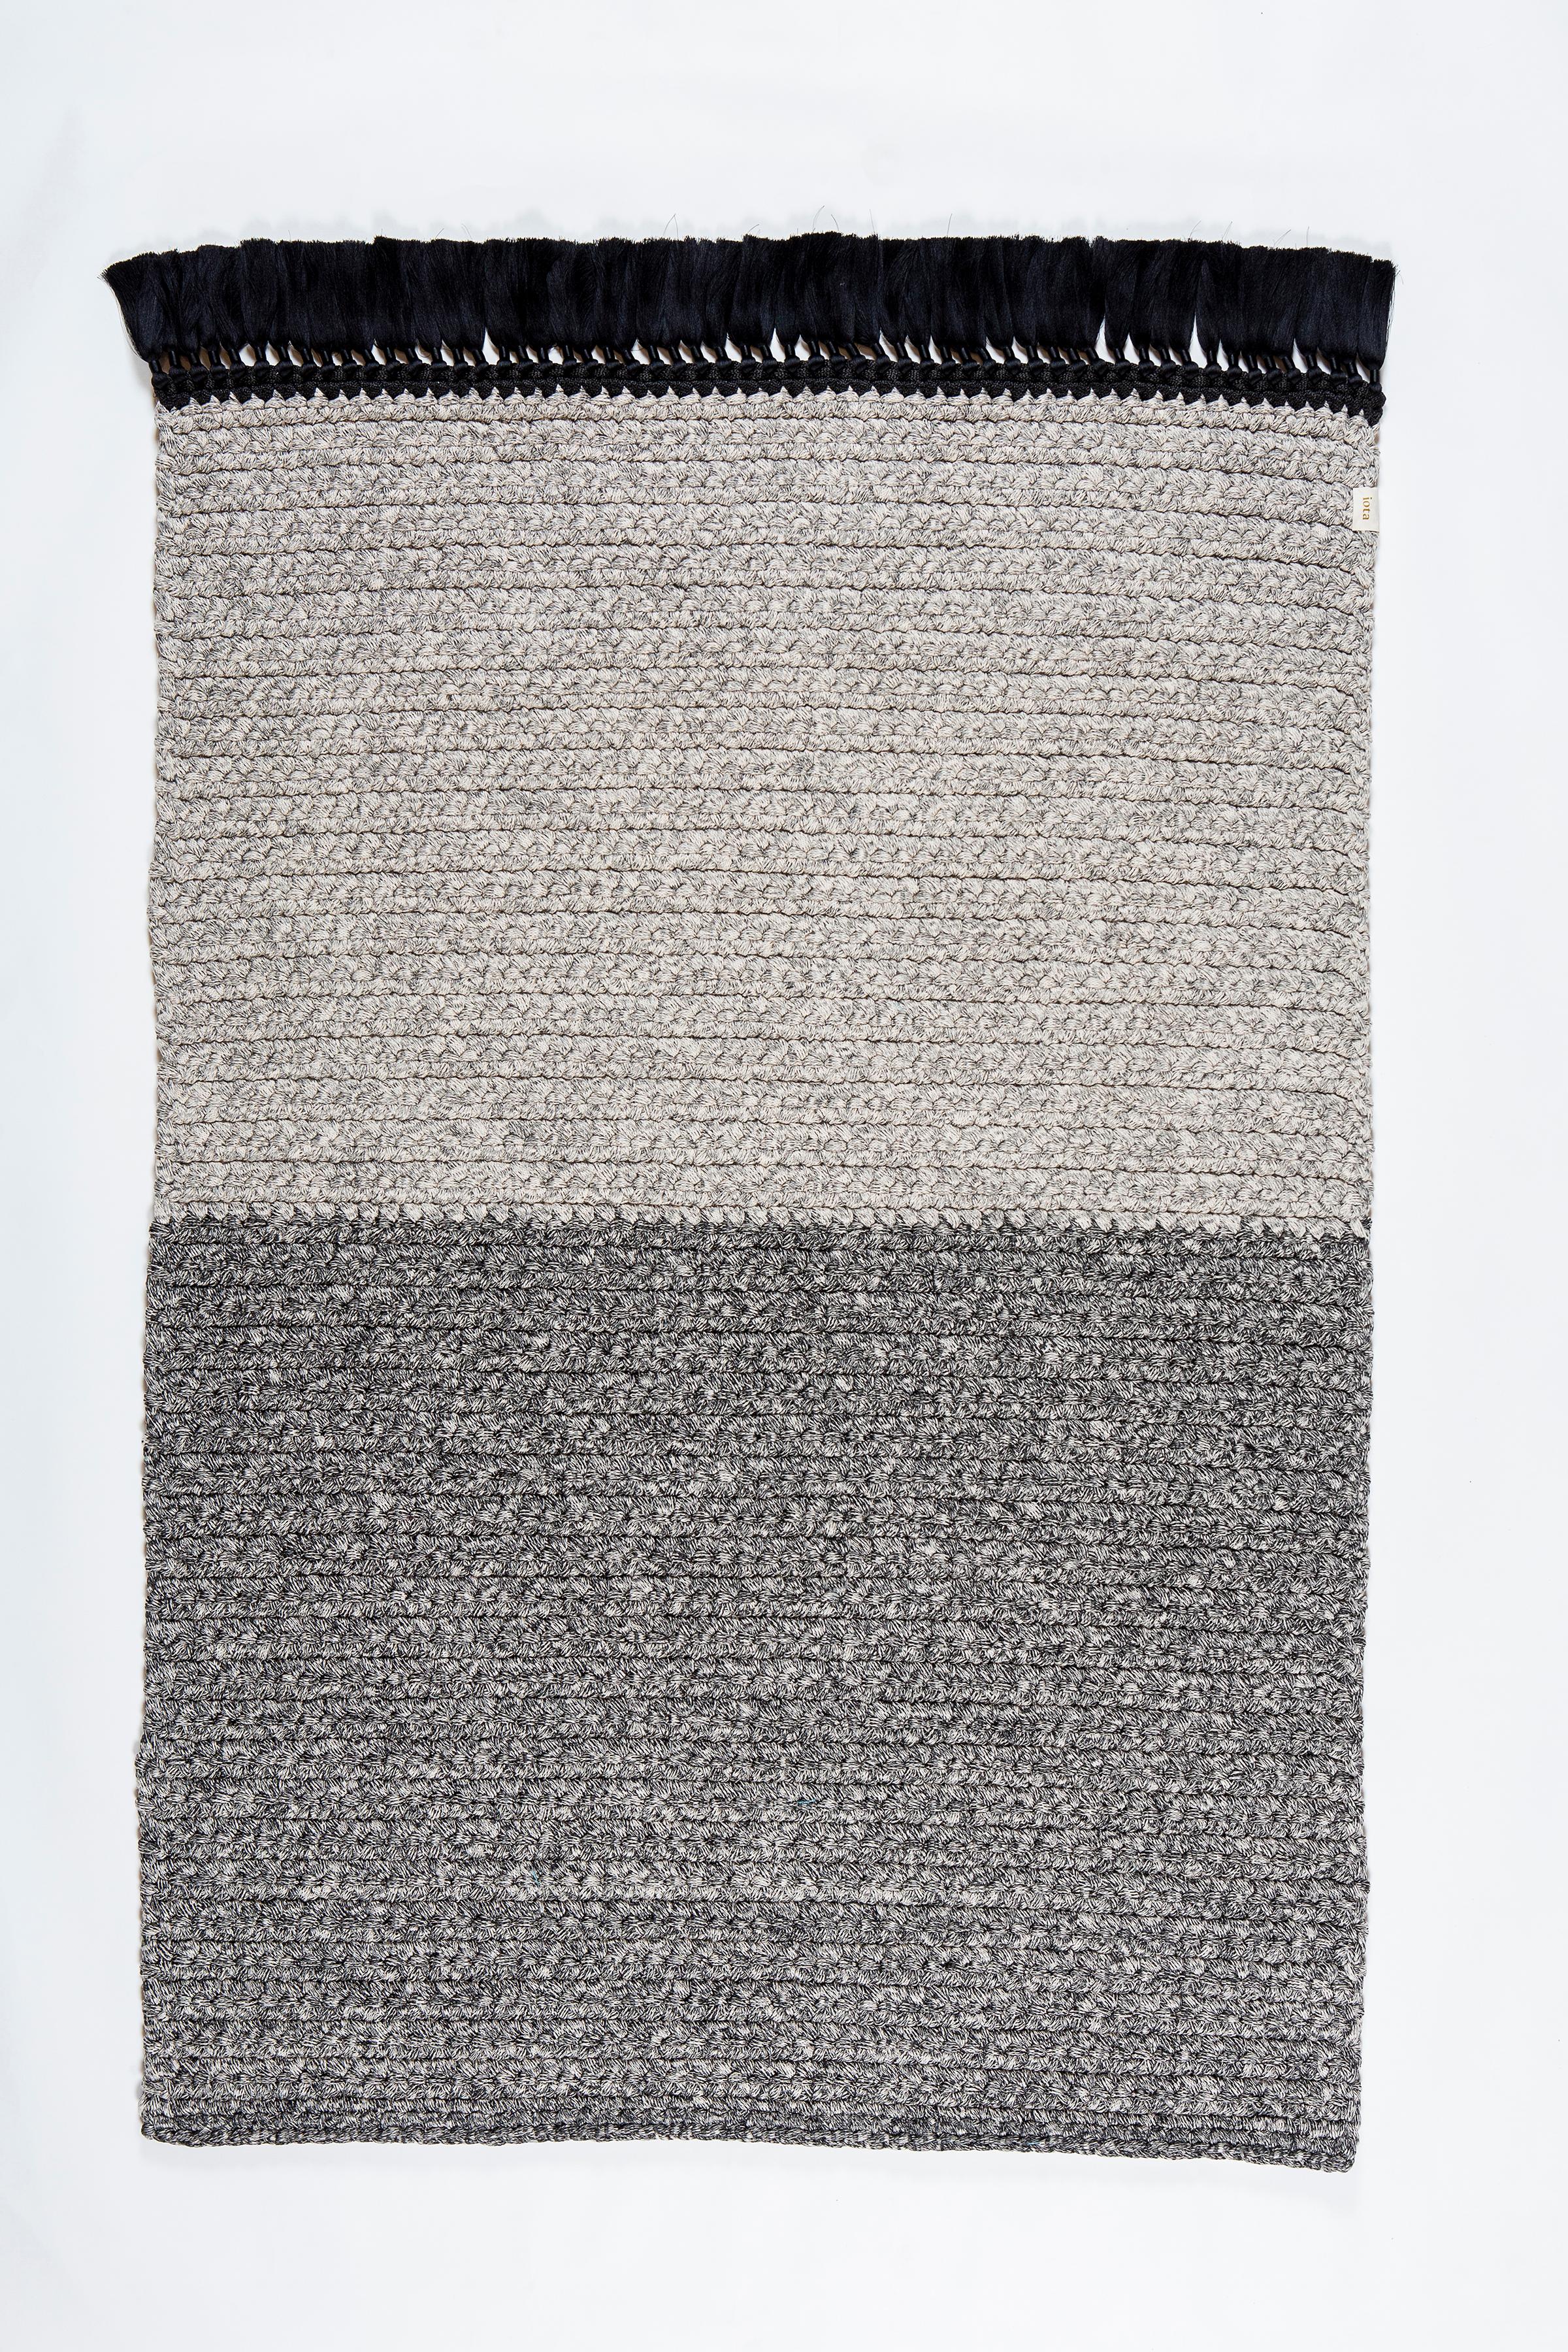 Handmade Crochet Two-Tone Rug in Black Made of iota's Bespoke Yarns 3